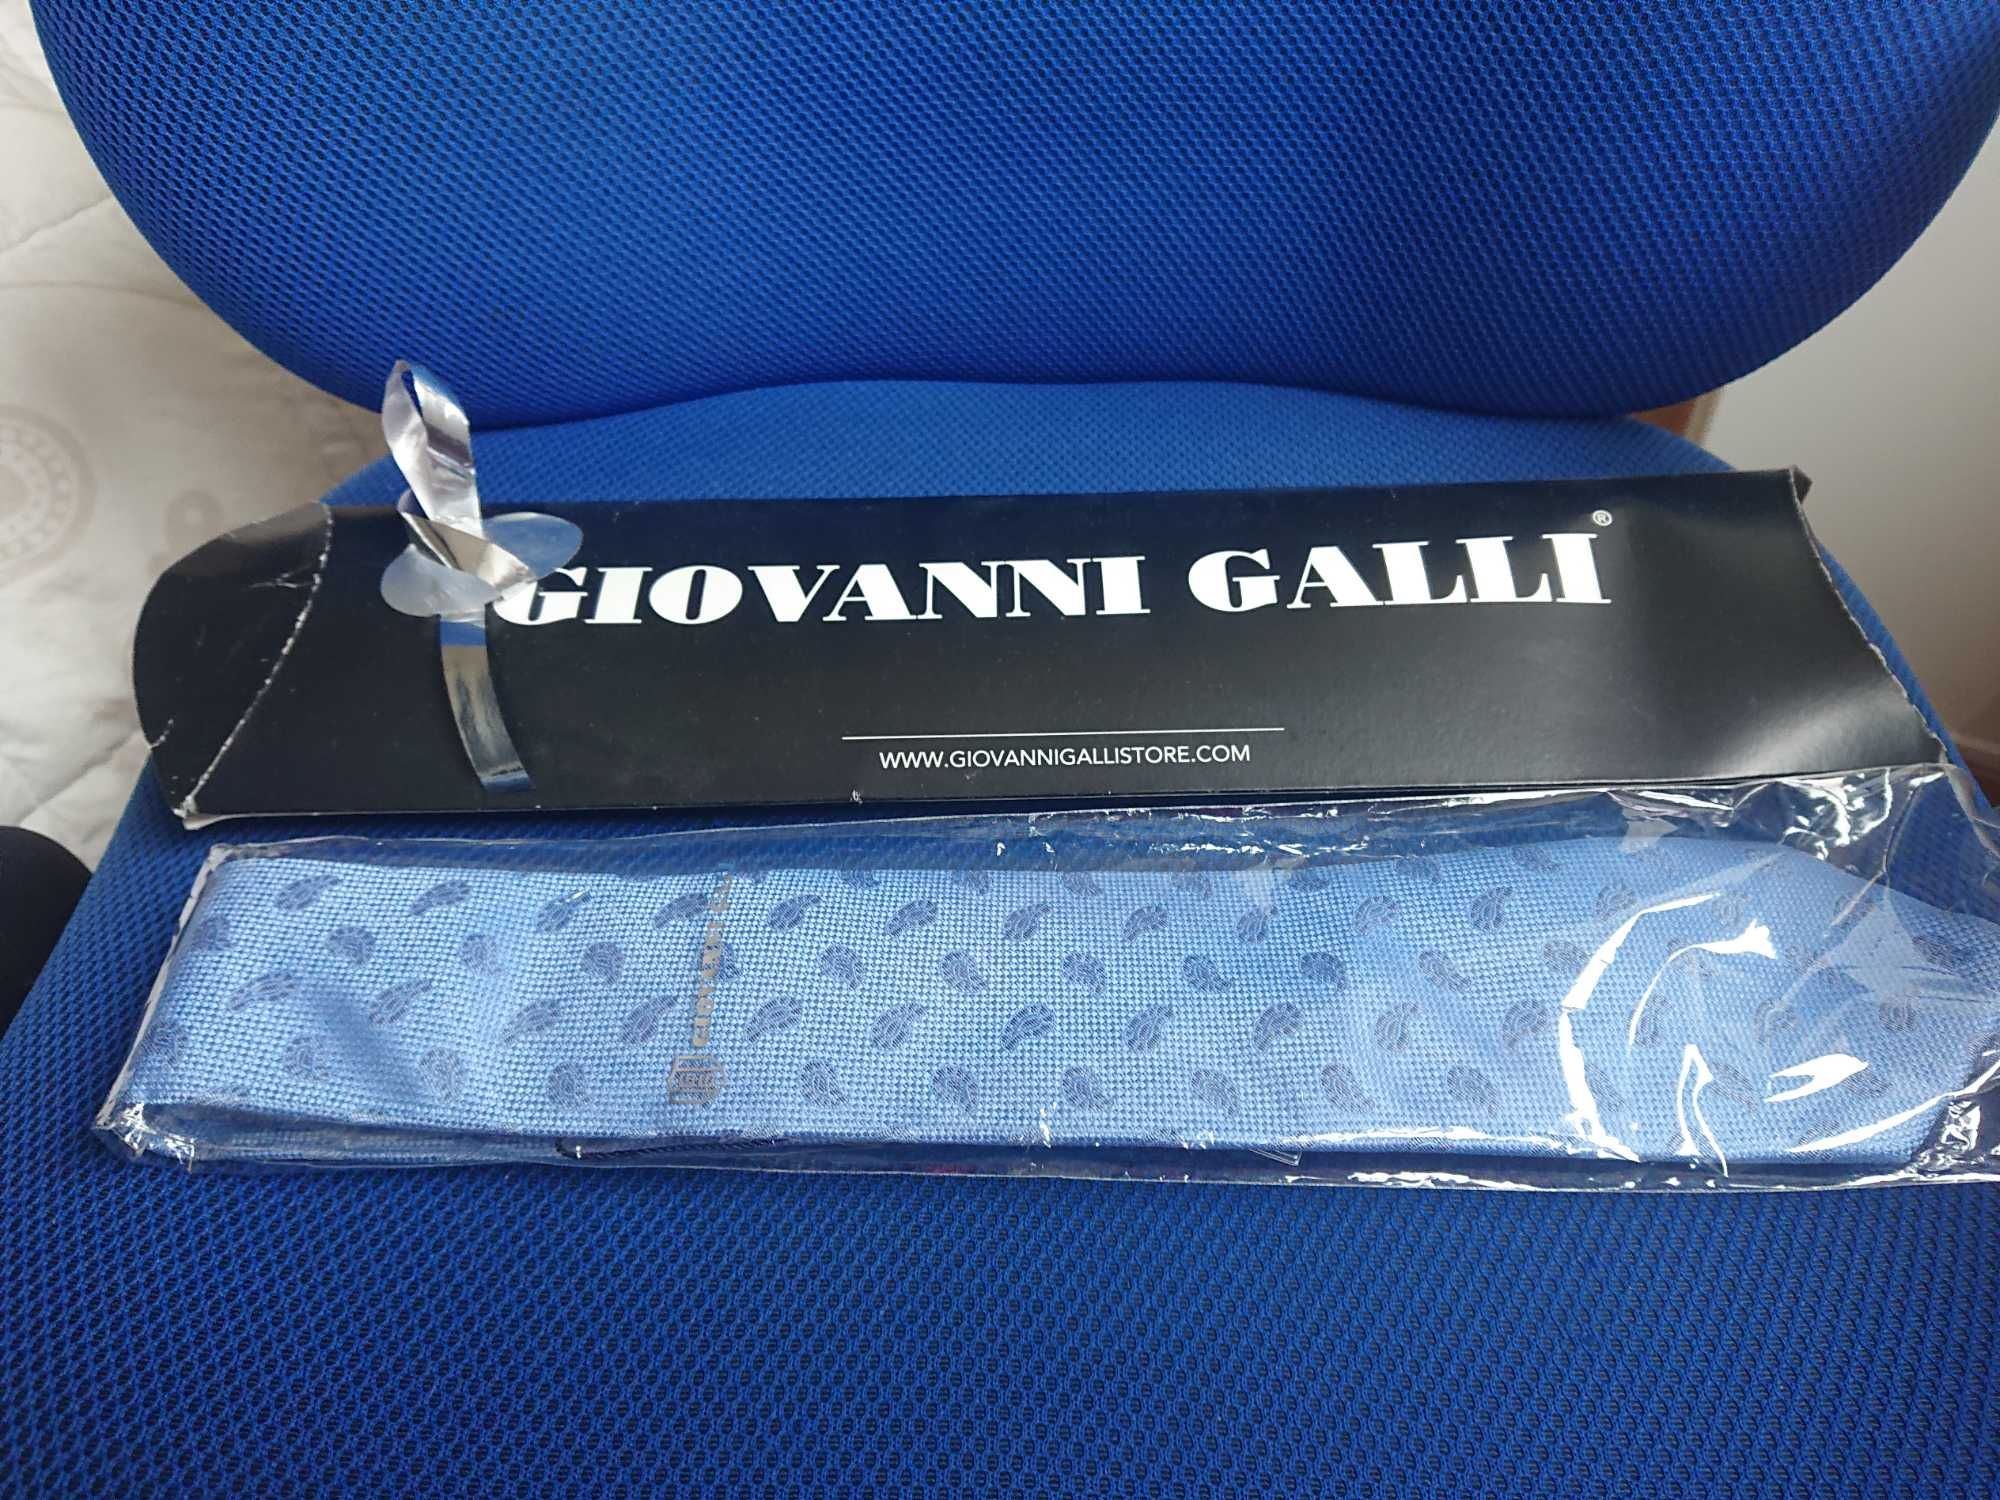 Gravata Giovanni Galli Nova selada nunca aberta com caixa e original